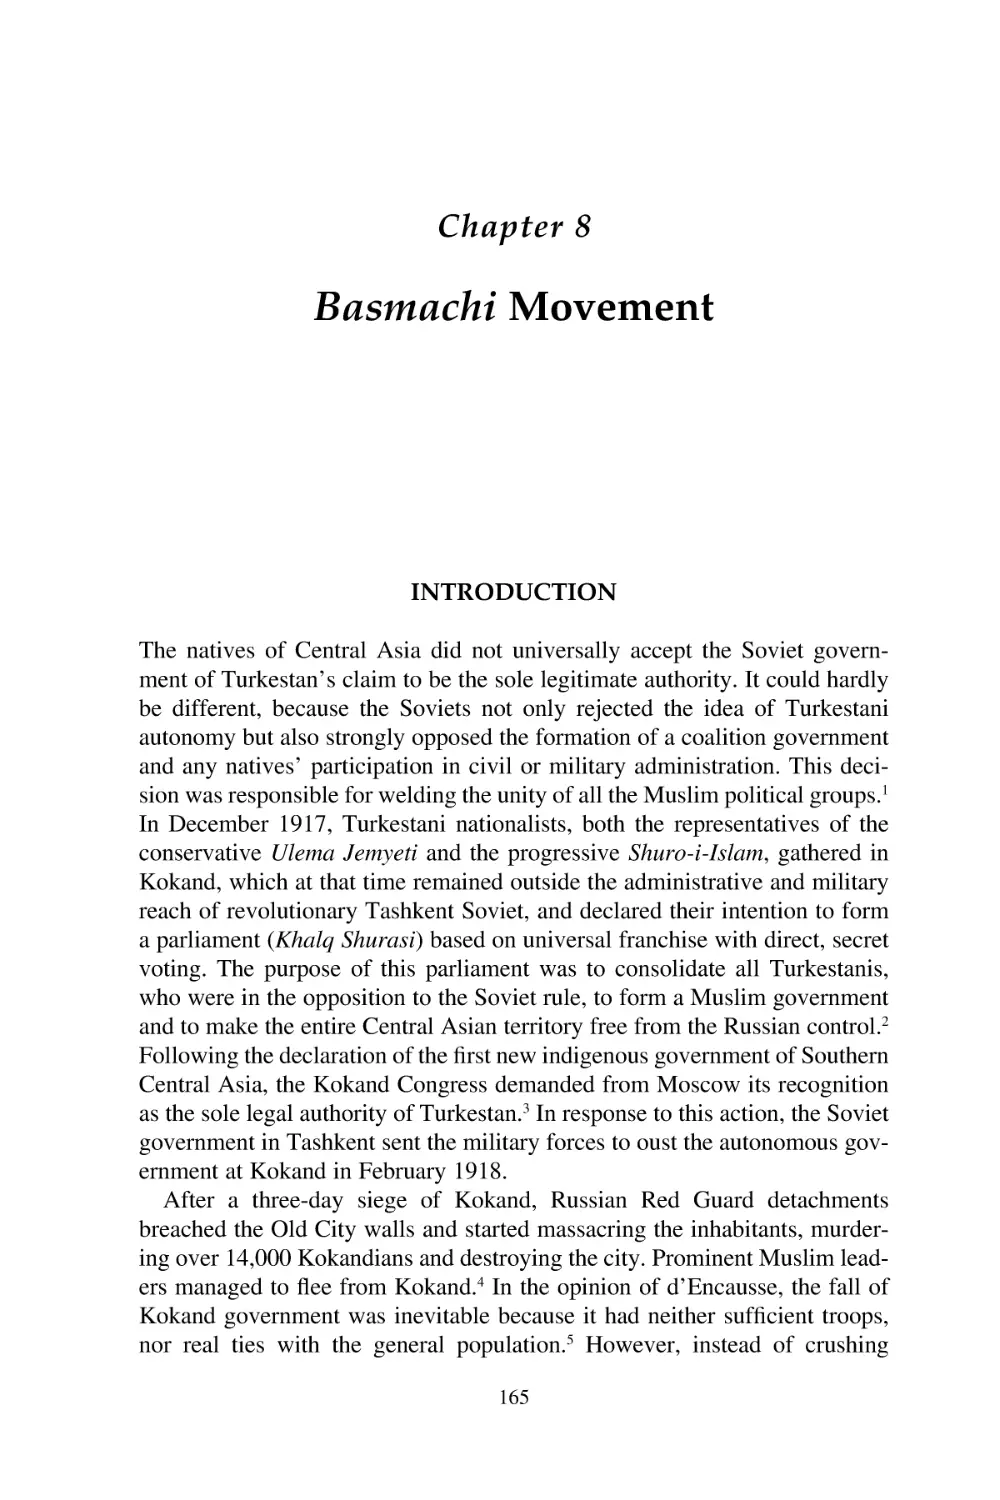 8. Basmachi Movement